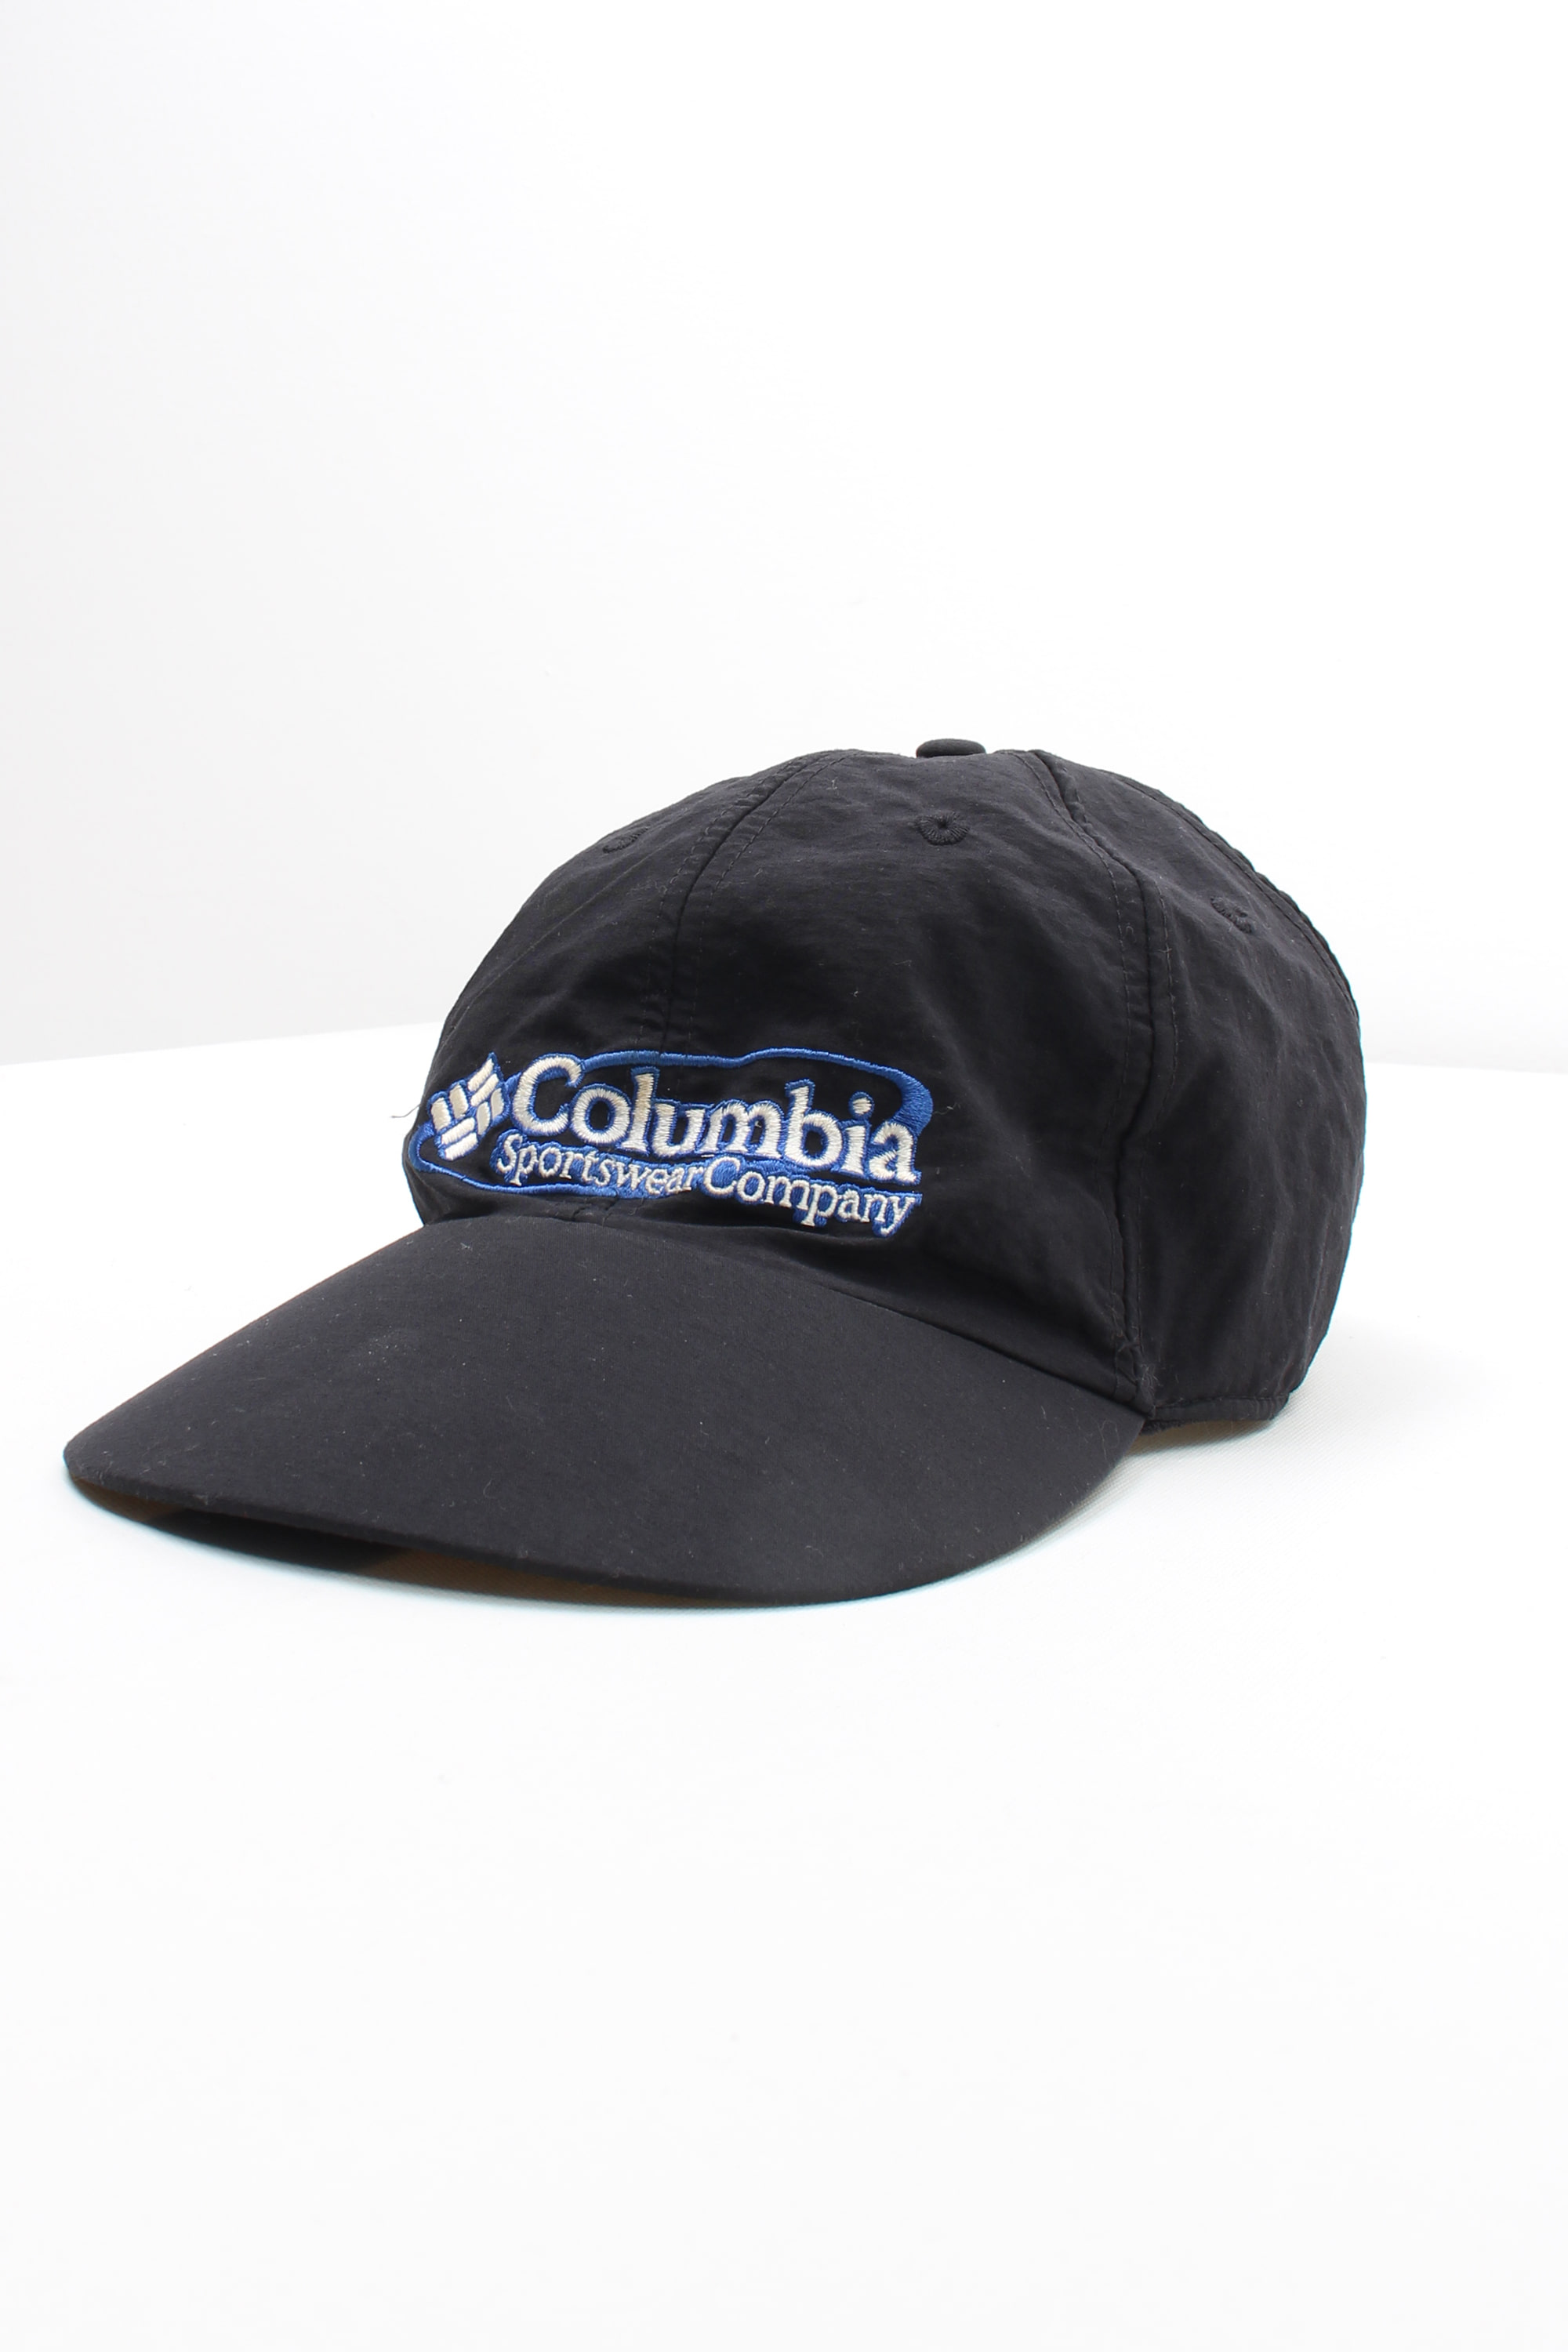 COLUMBIA Ball Cap